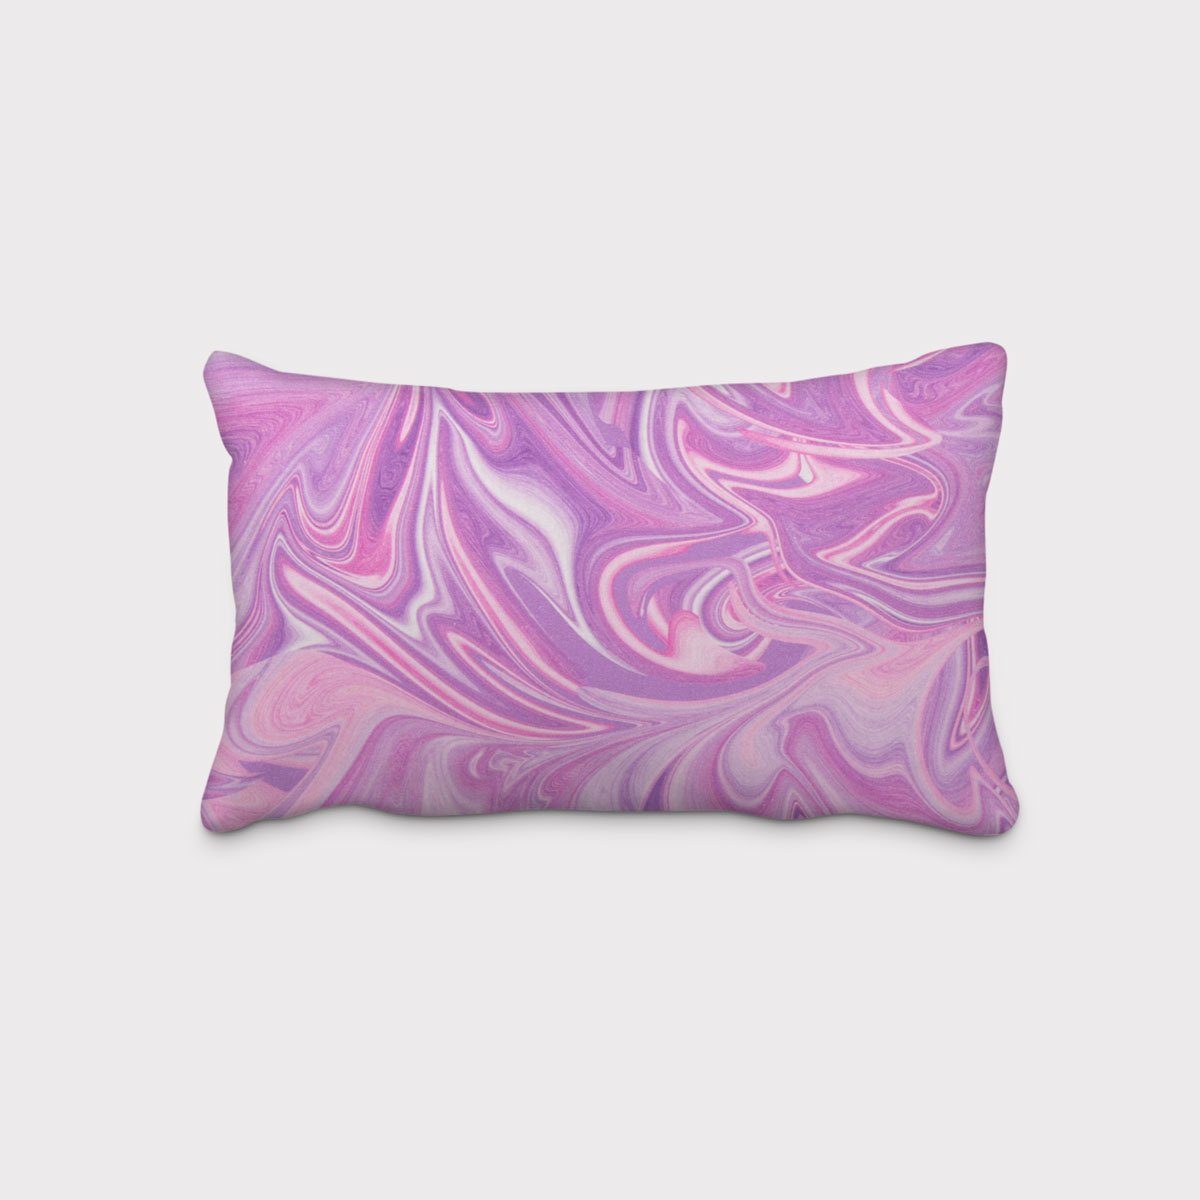 SCHÖNER LEBEN. Dekokissen SCHÖNER LEBEN. Kissenhülle Digitaldruck Retro Batik lila pink